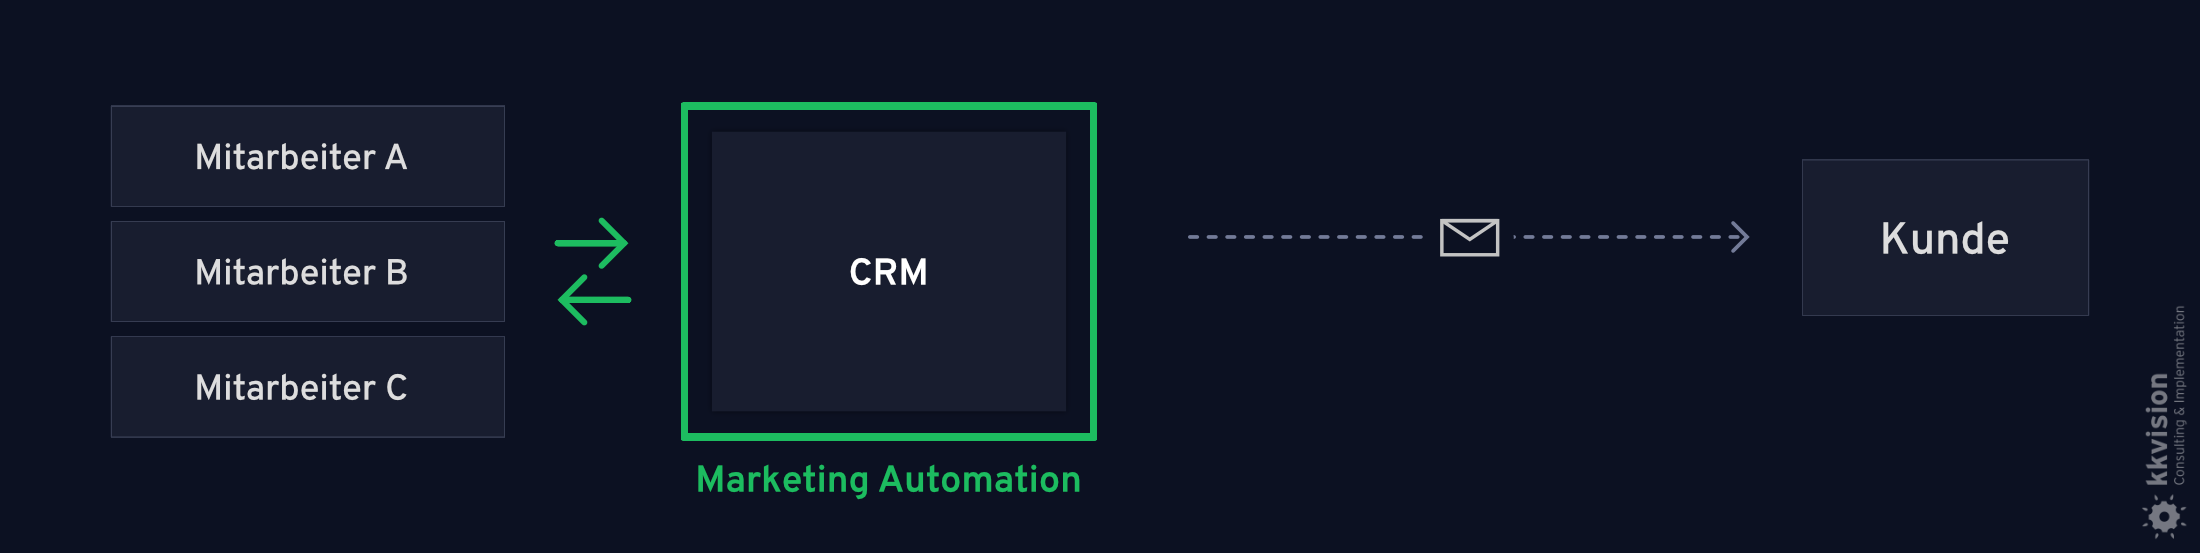 CRM & Marketing Automation_2